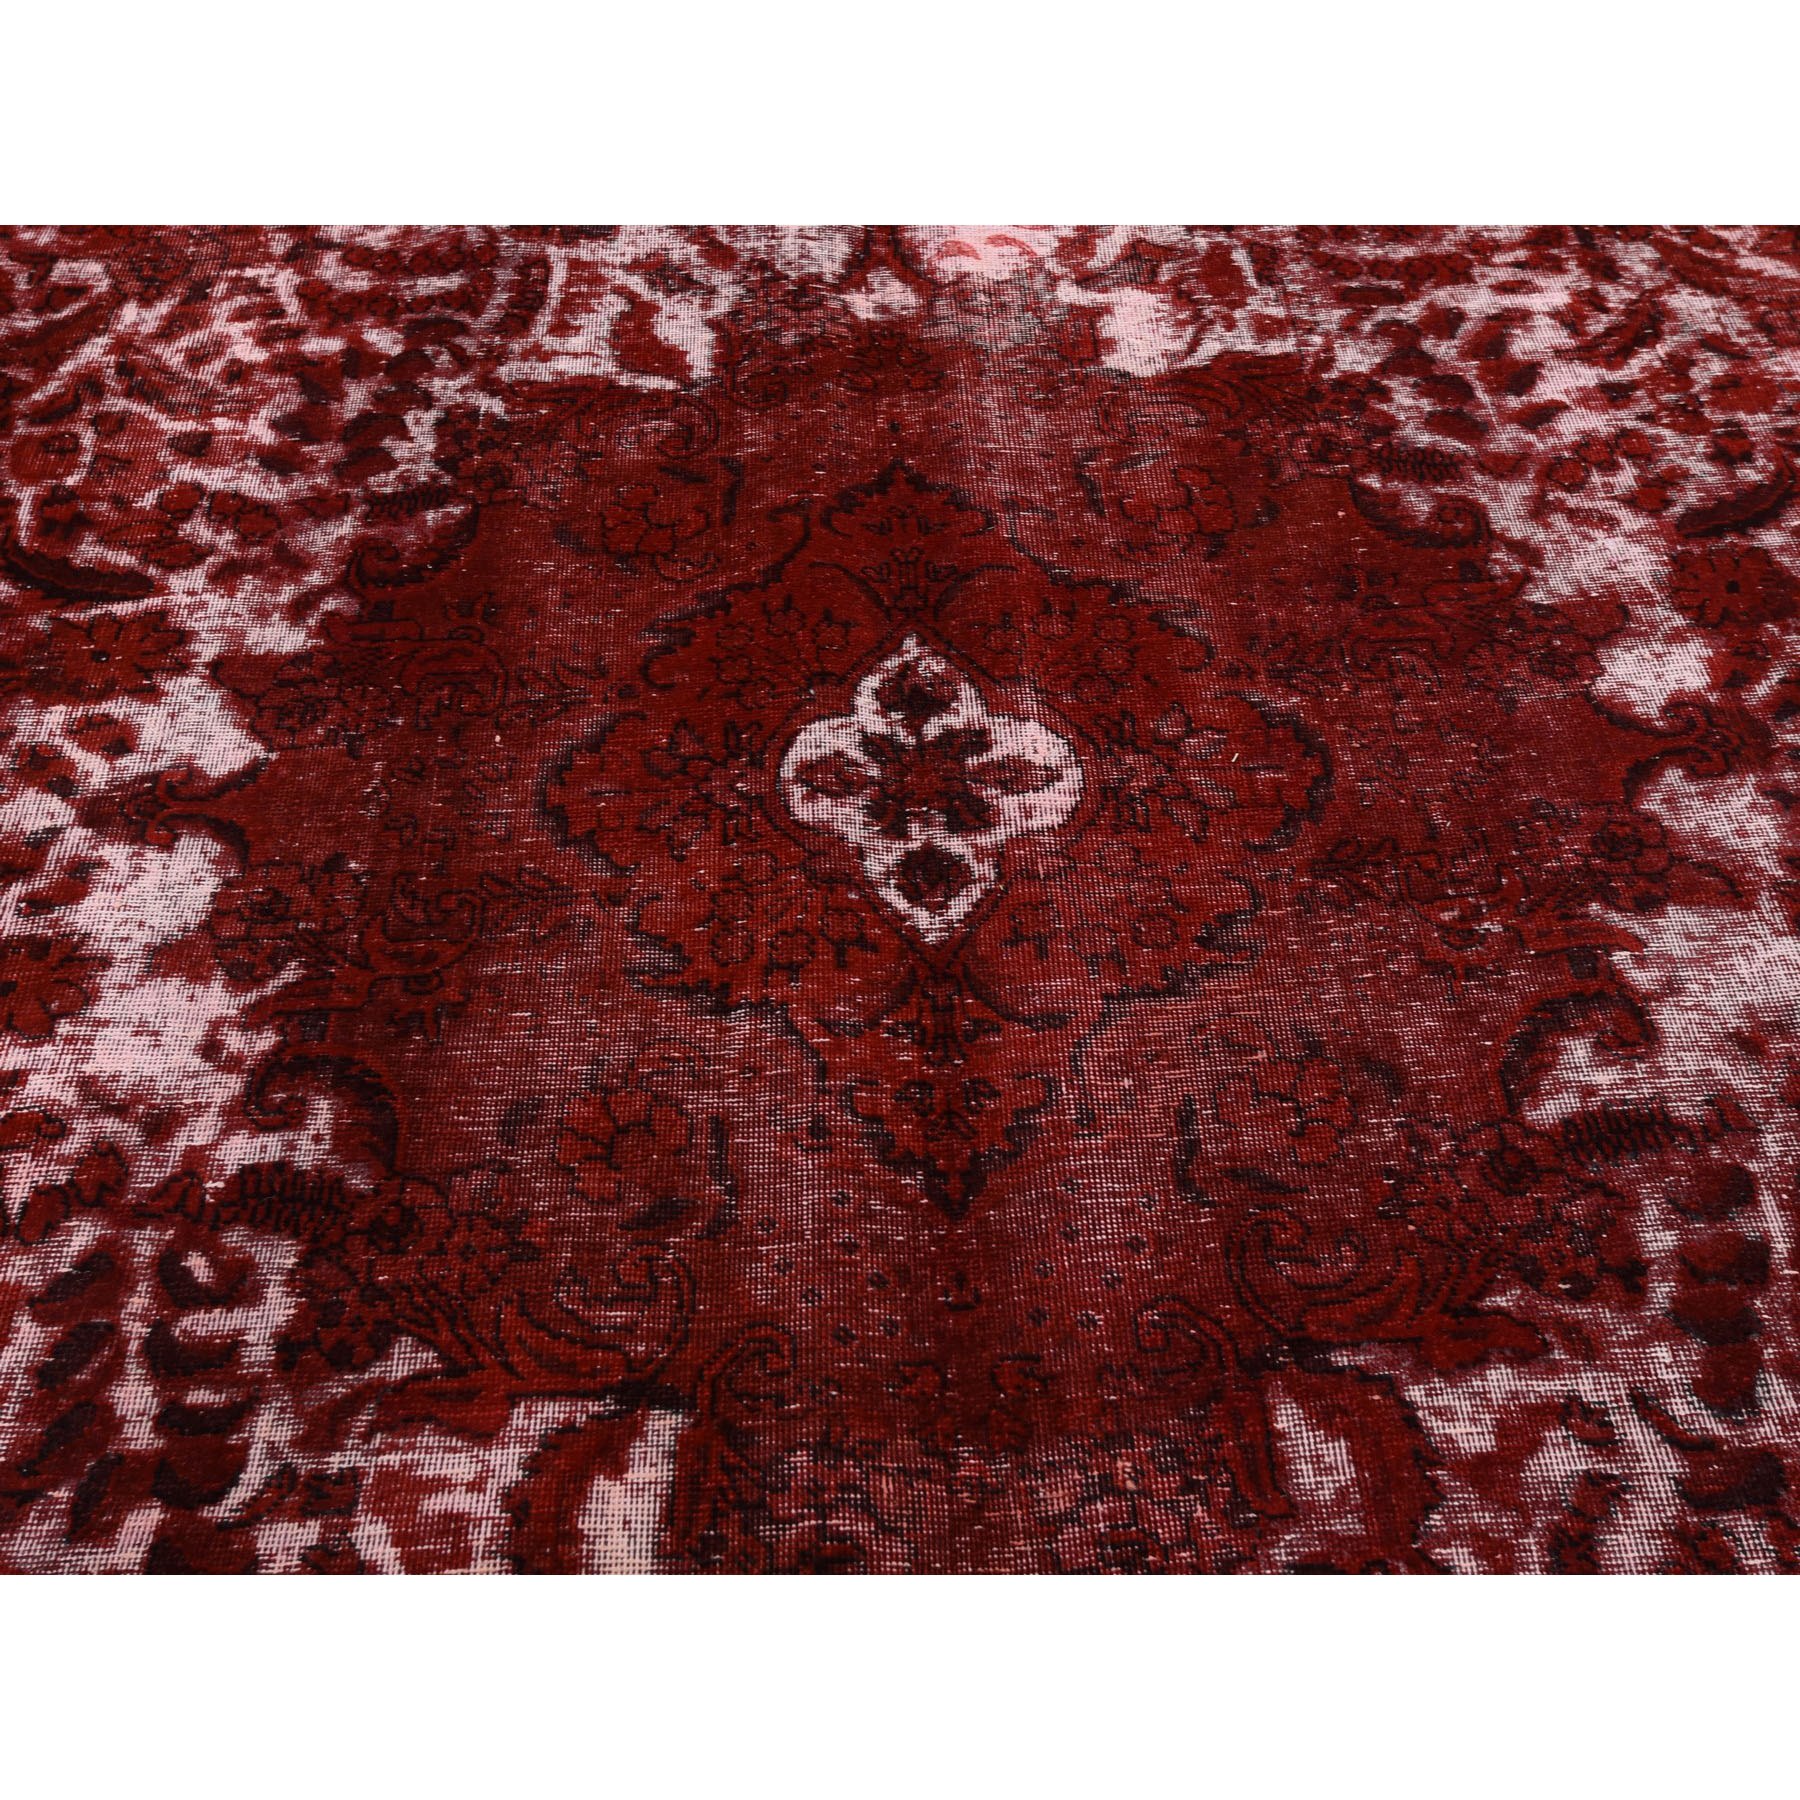 10-x12-5  Pure Wool Red Overdyed Persian Tabriz Barjasta Vintage Rug 